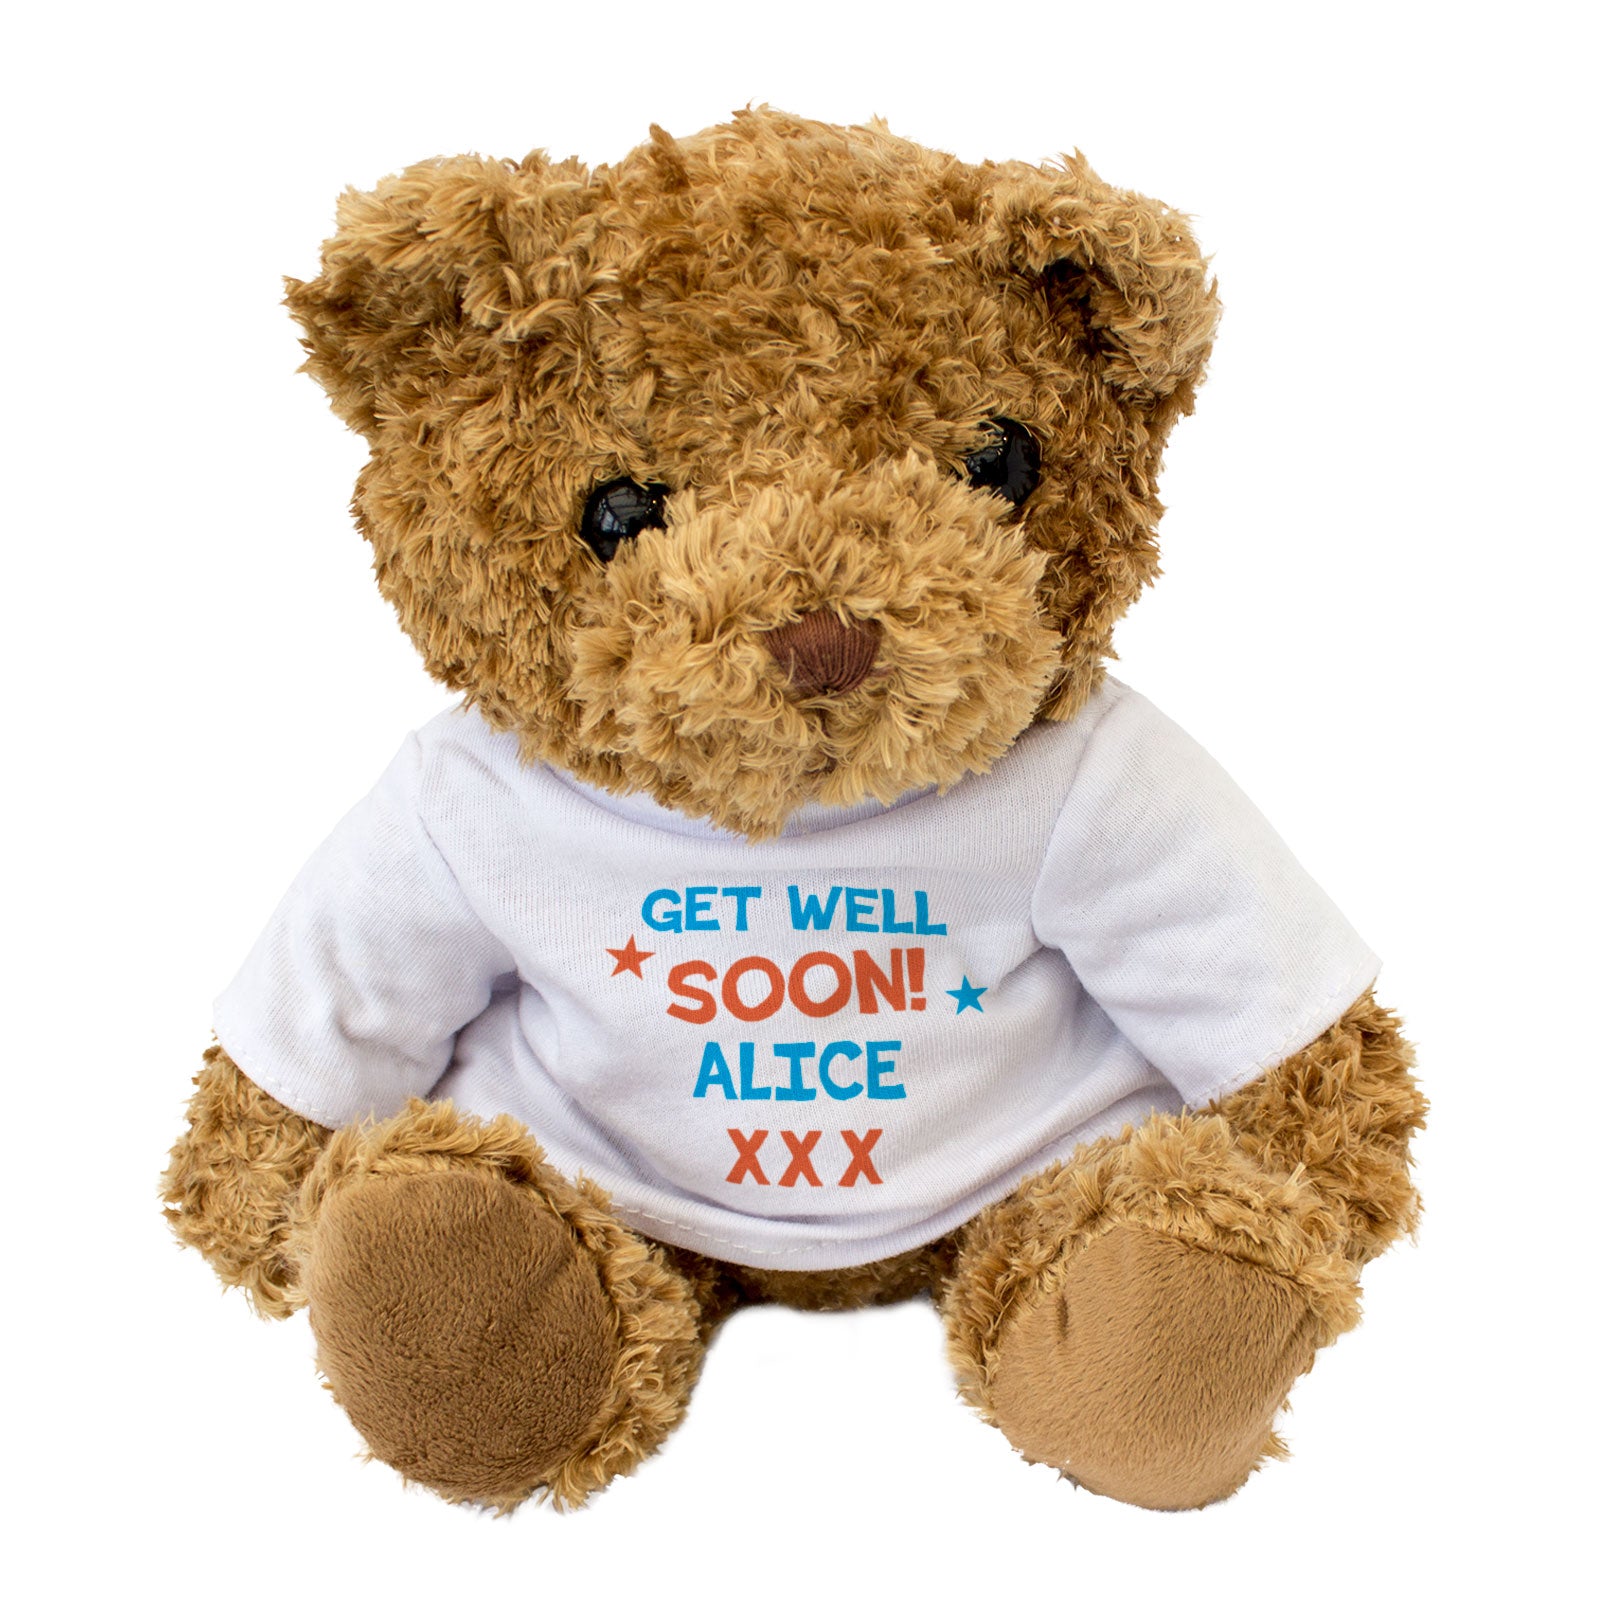 Get Well Soon Alice - Teddy Bear